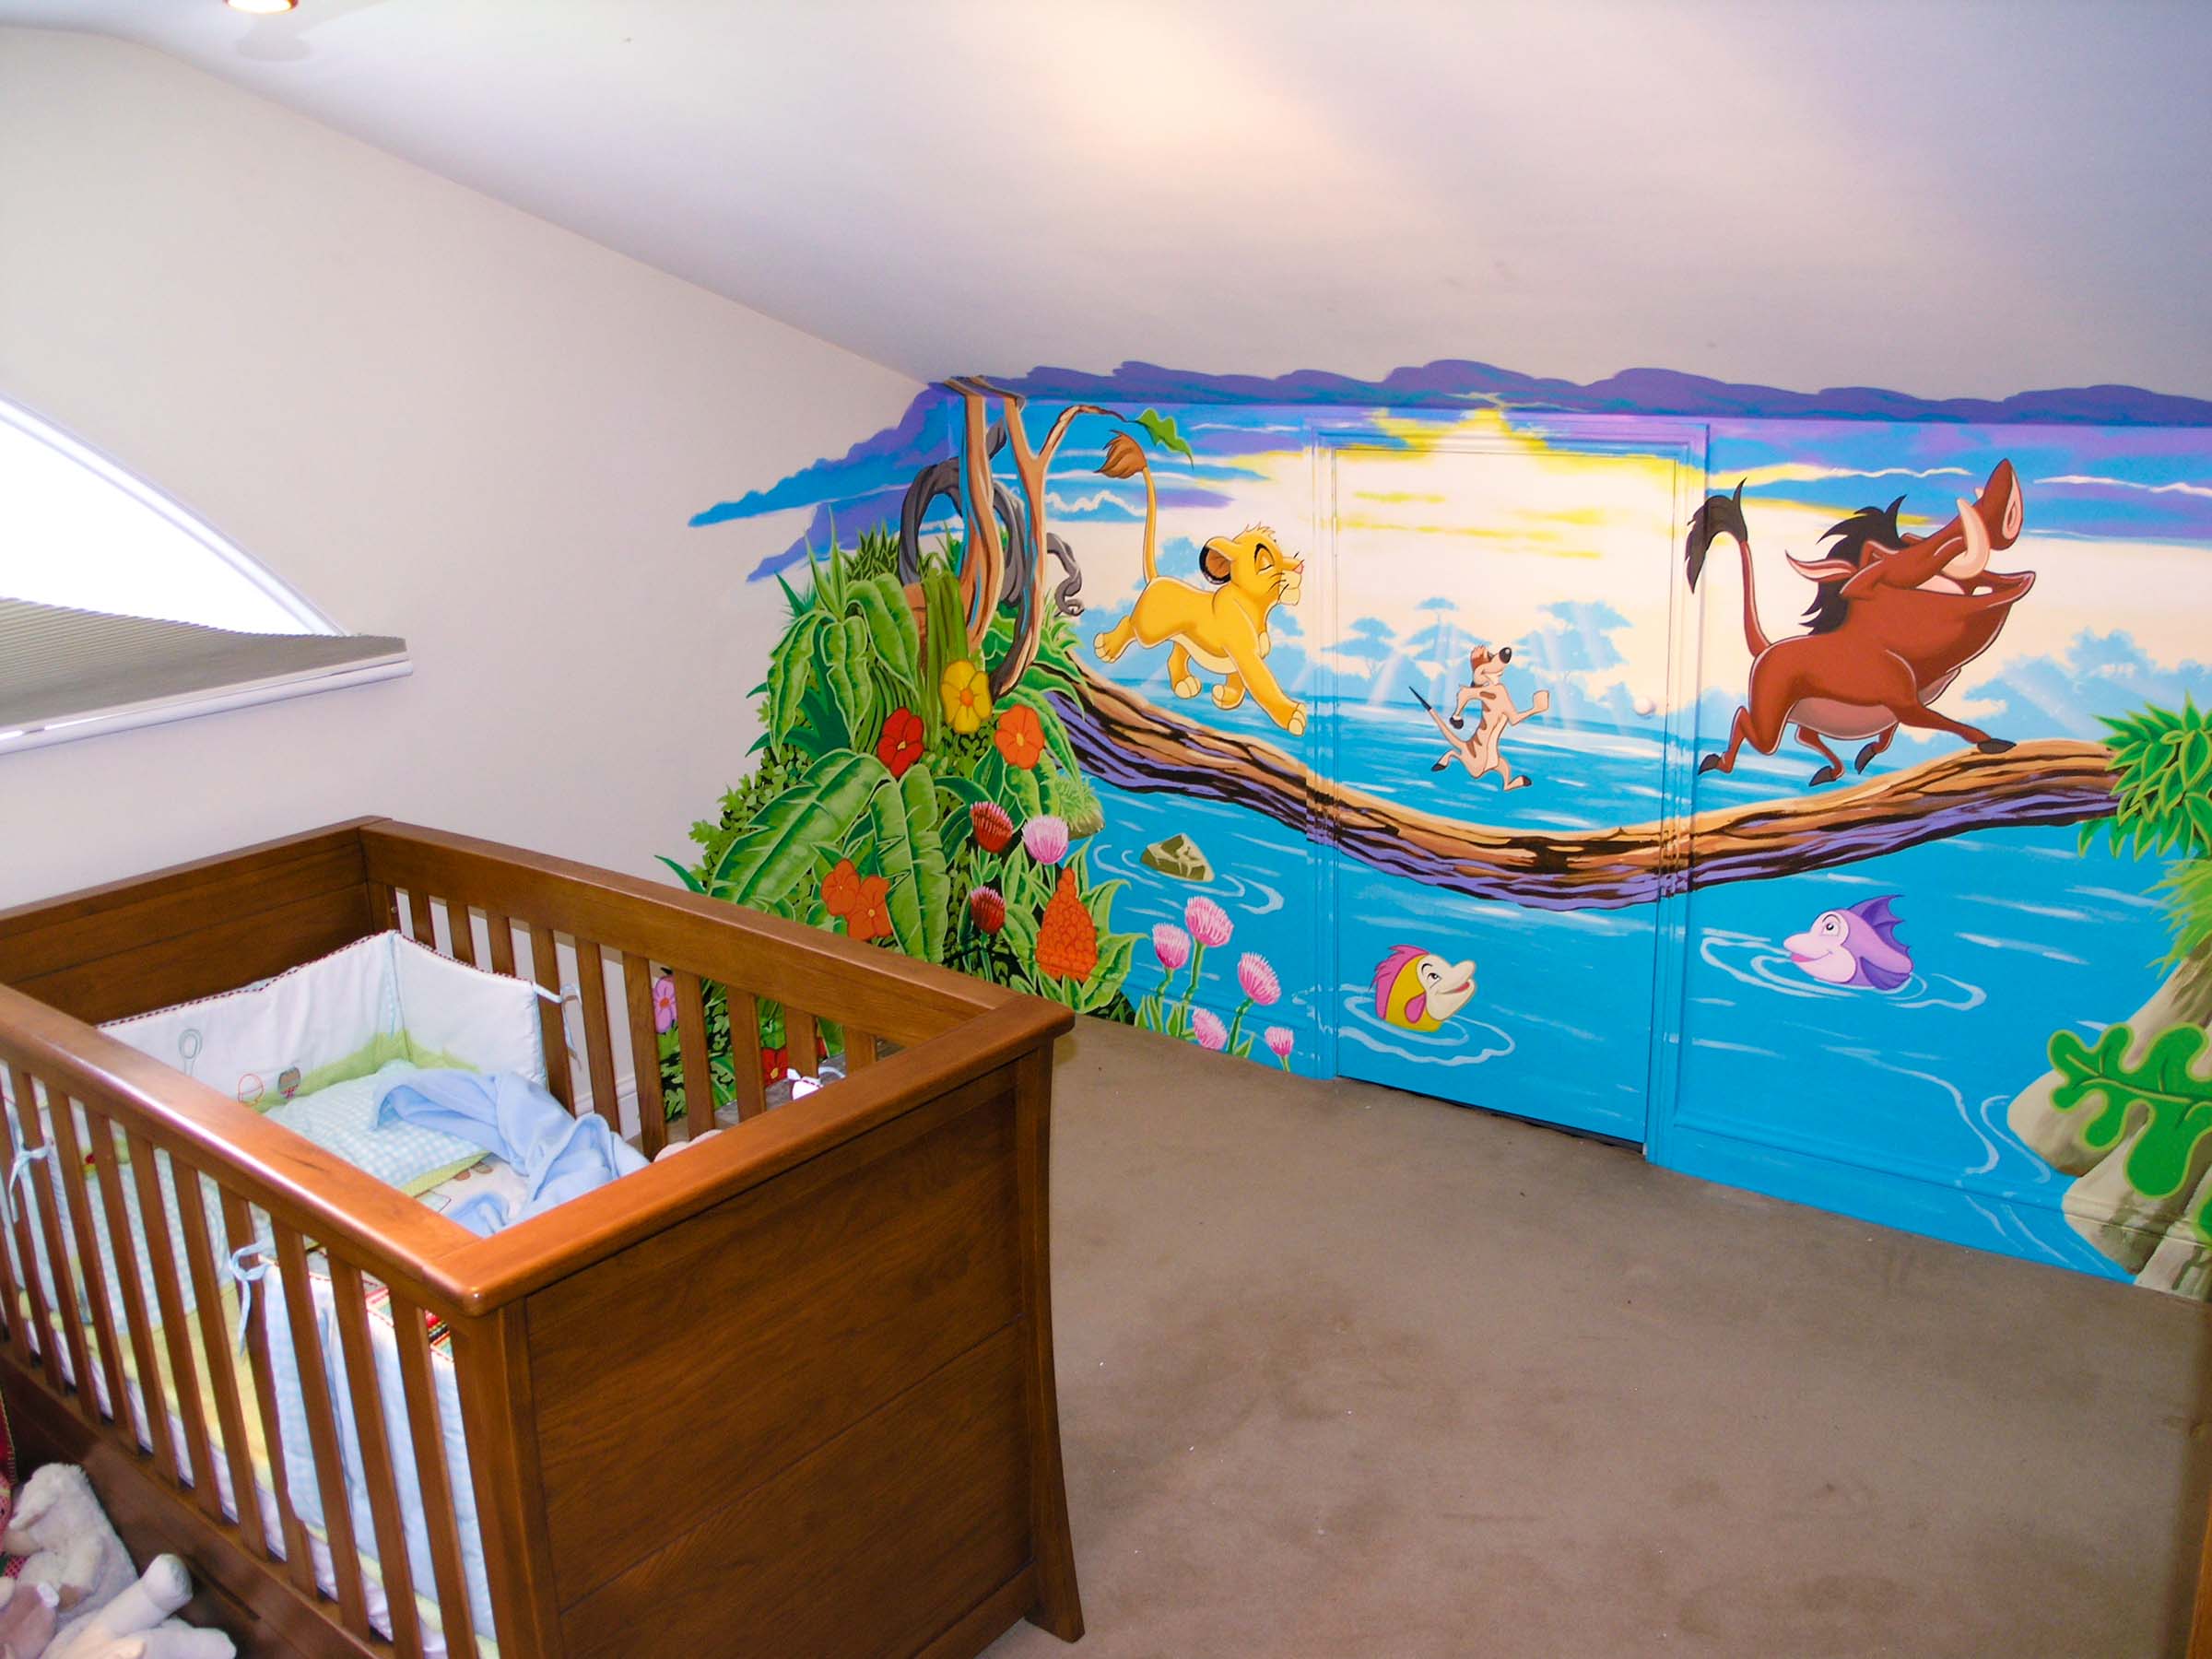 Disney's Lion King wall mural handpainted in attic room nursery, hiding a cupboard door beautifully